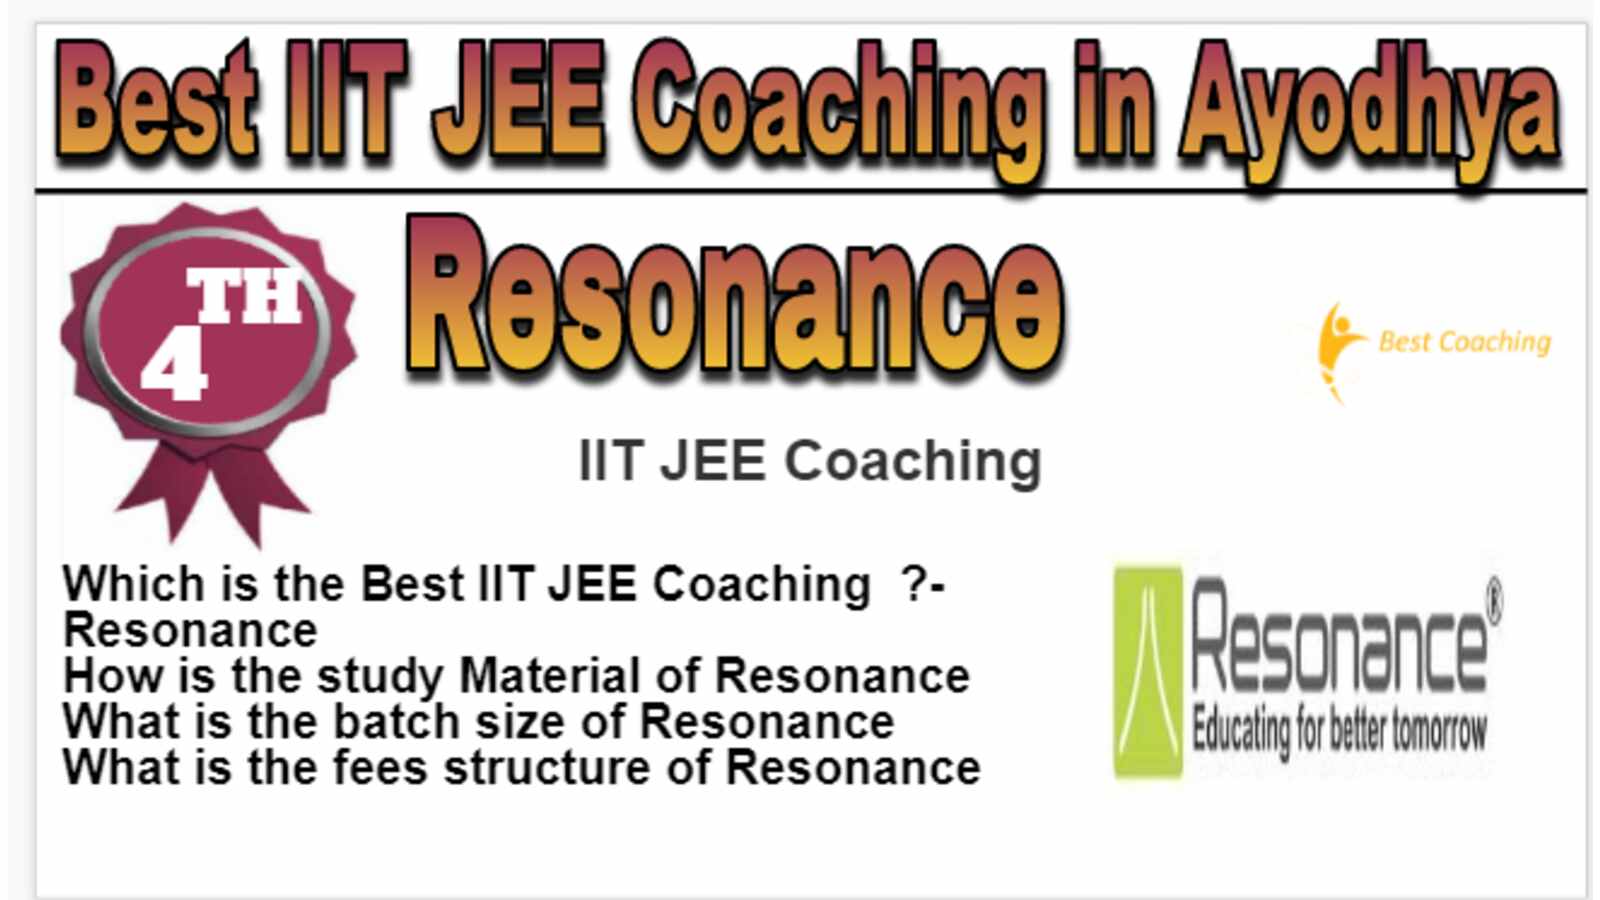 Rank 4 Best IIT JEE Coaching in Ayodhya